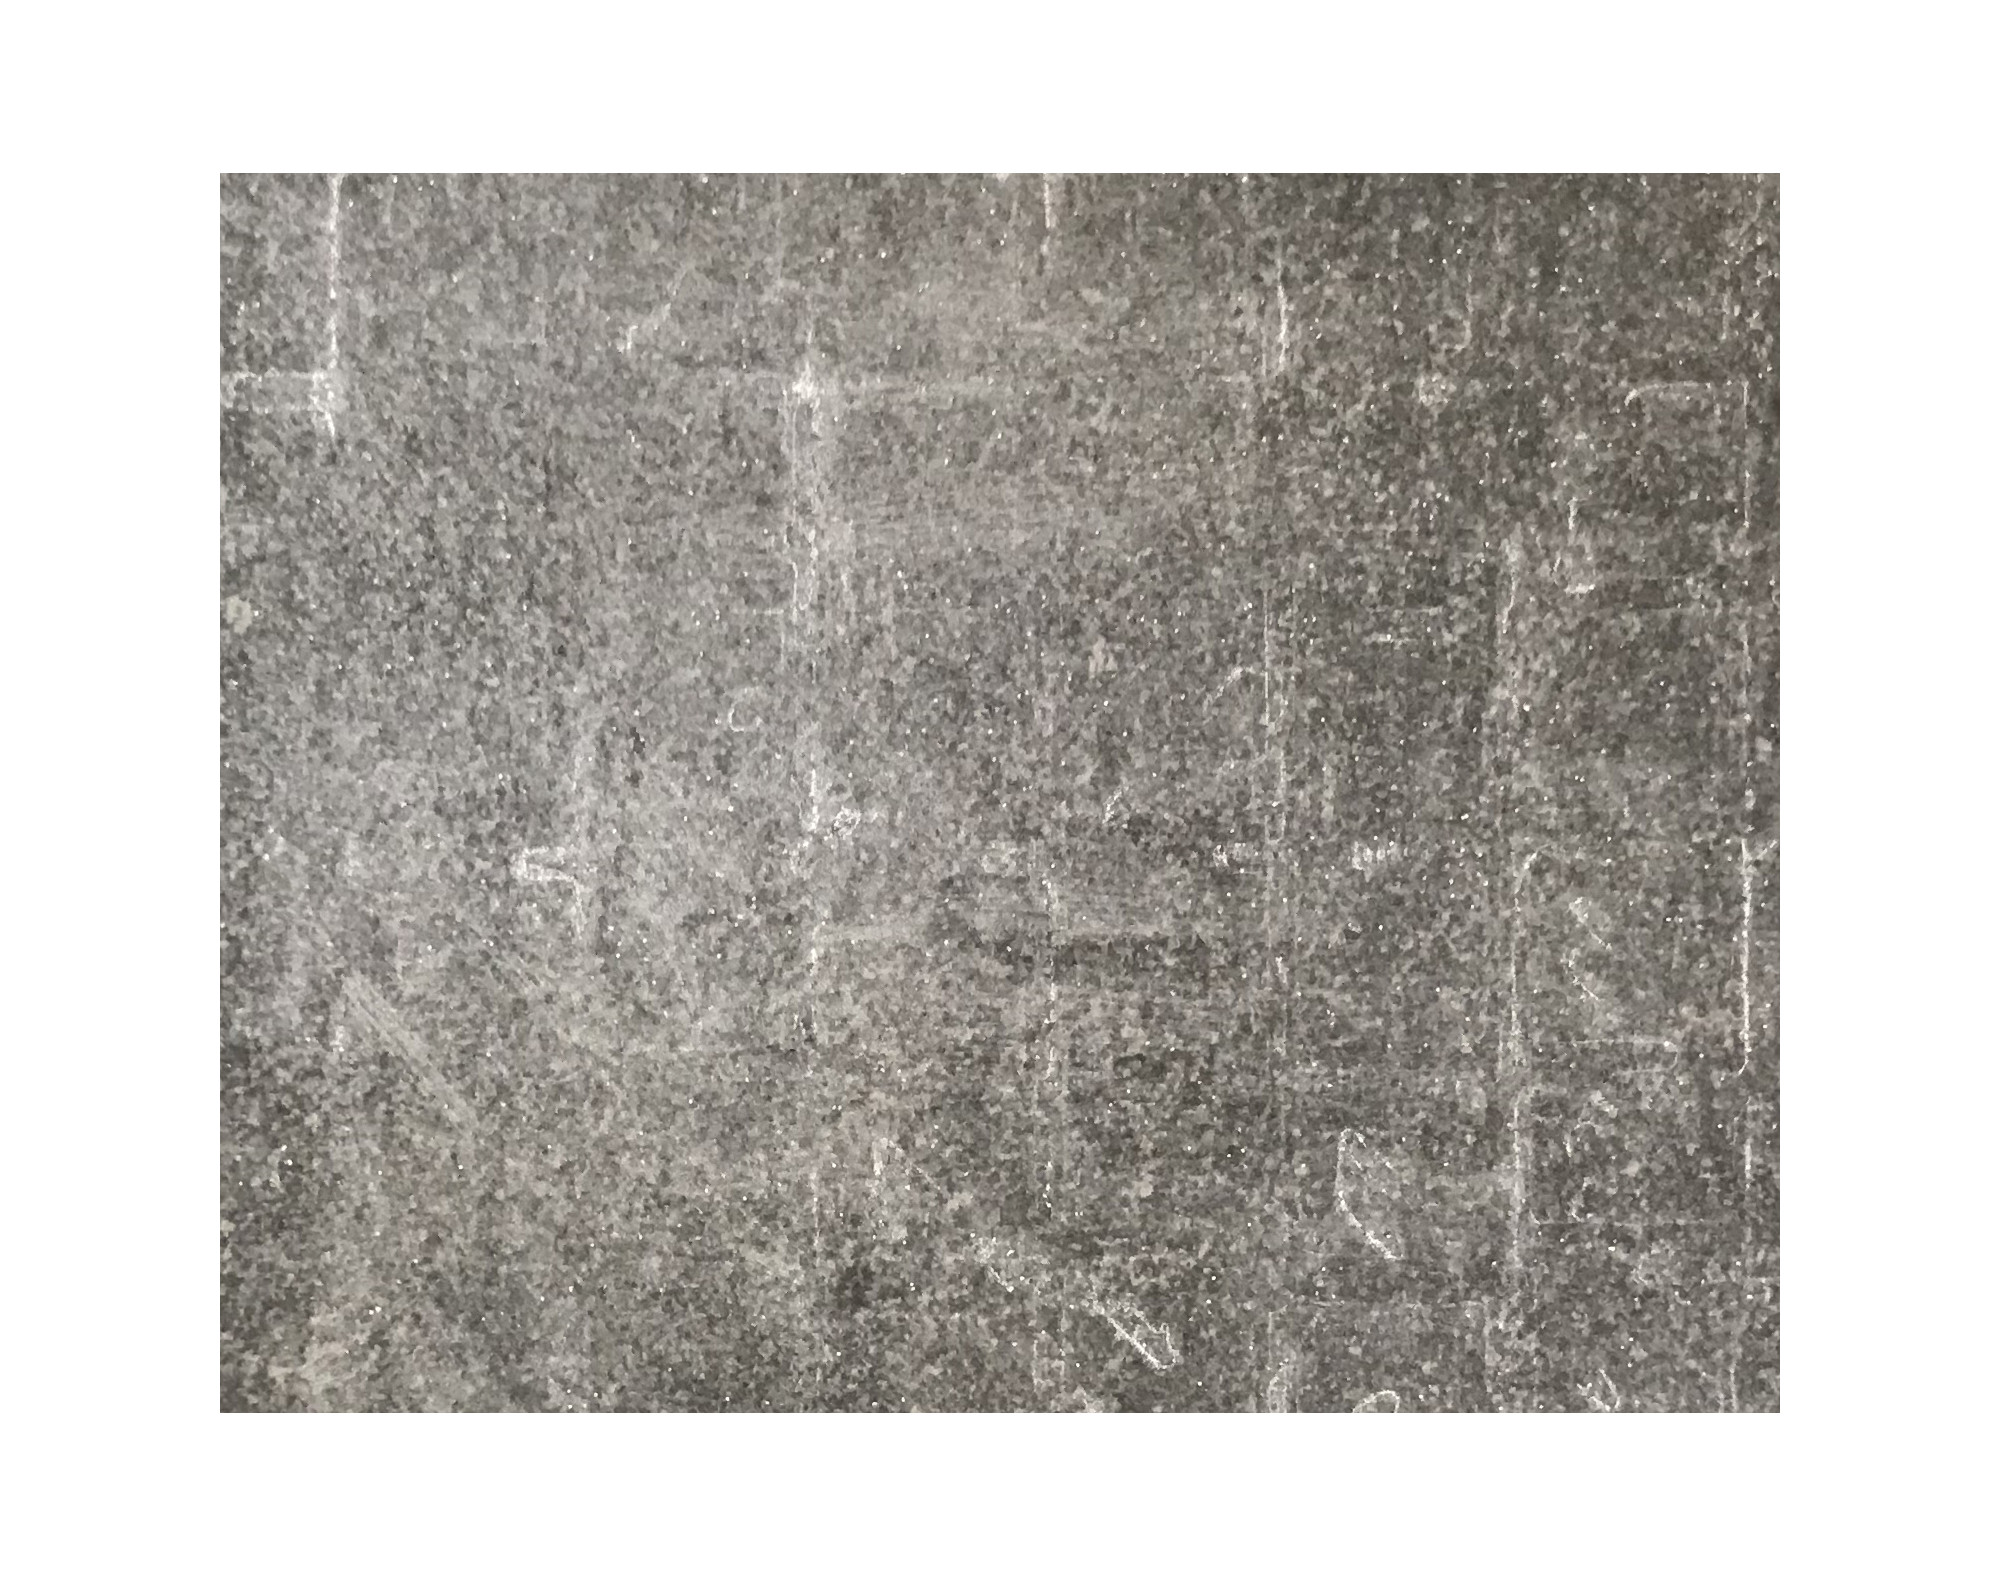 Harmo roc maranelloset, keramiek-serie, 8-vormig d:4,20mx6,60m, zand zwart, keramisch porselein